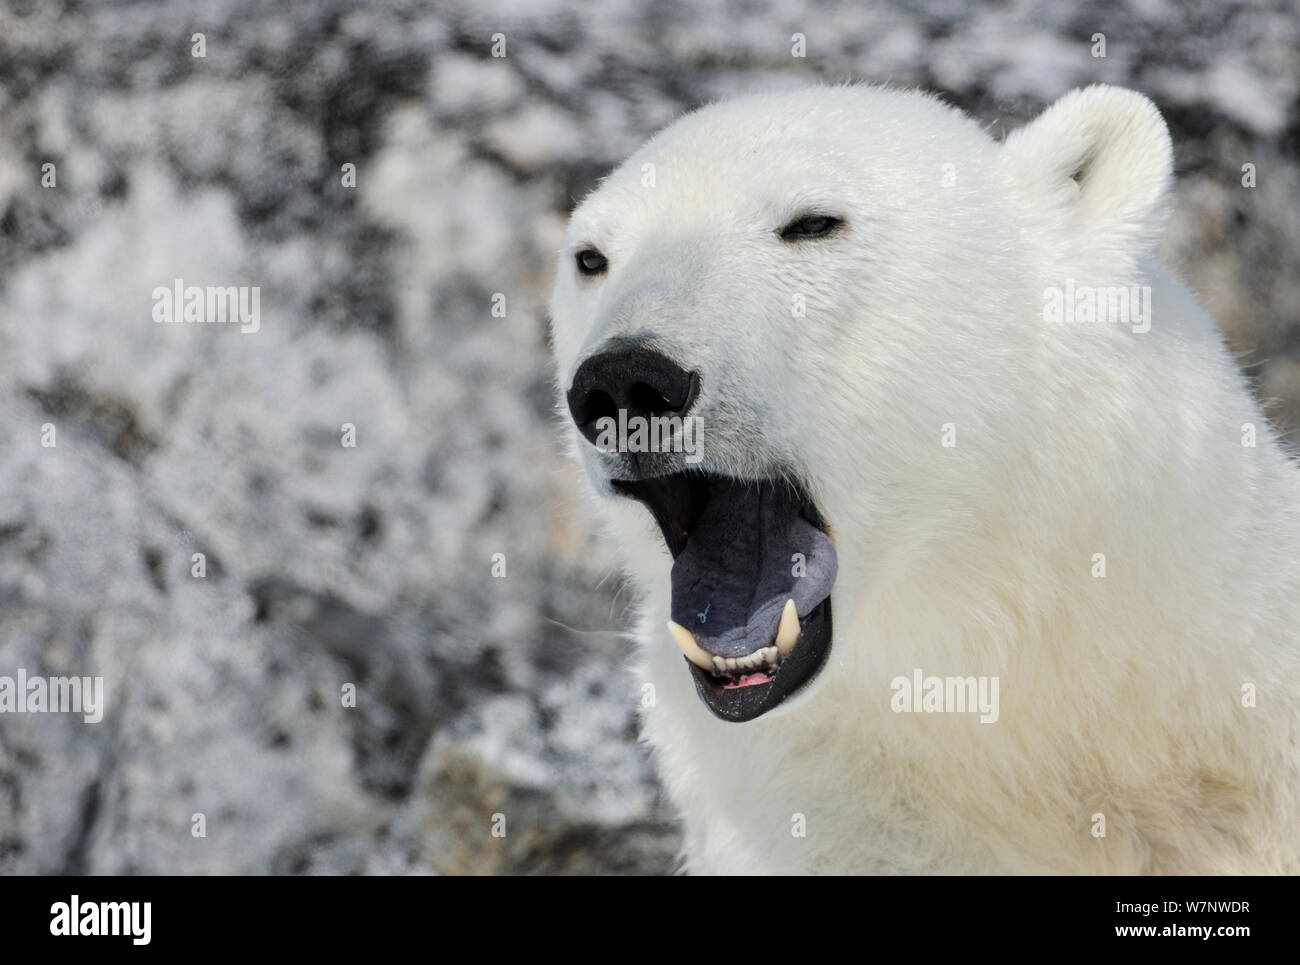 Polar Bear (Ursus maritimus) face portrait with bear yawning showing blue tongue, Svalbard, Norway Stock Photo